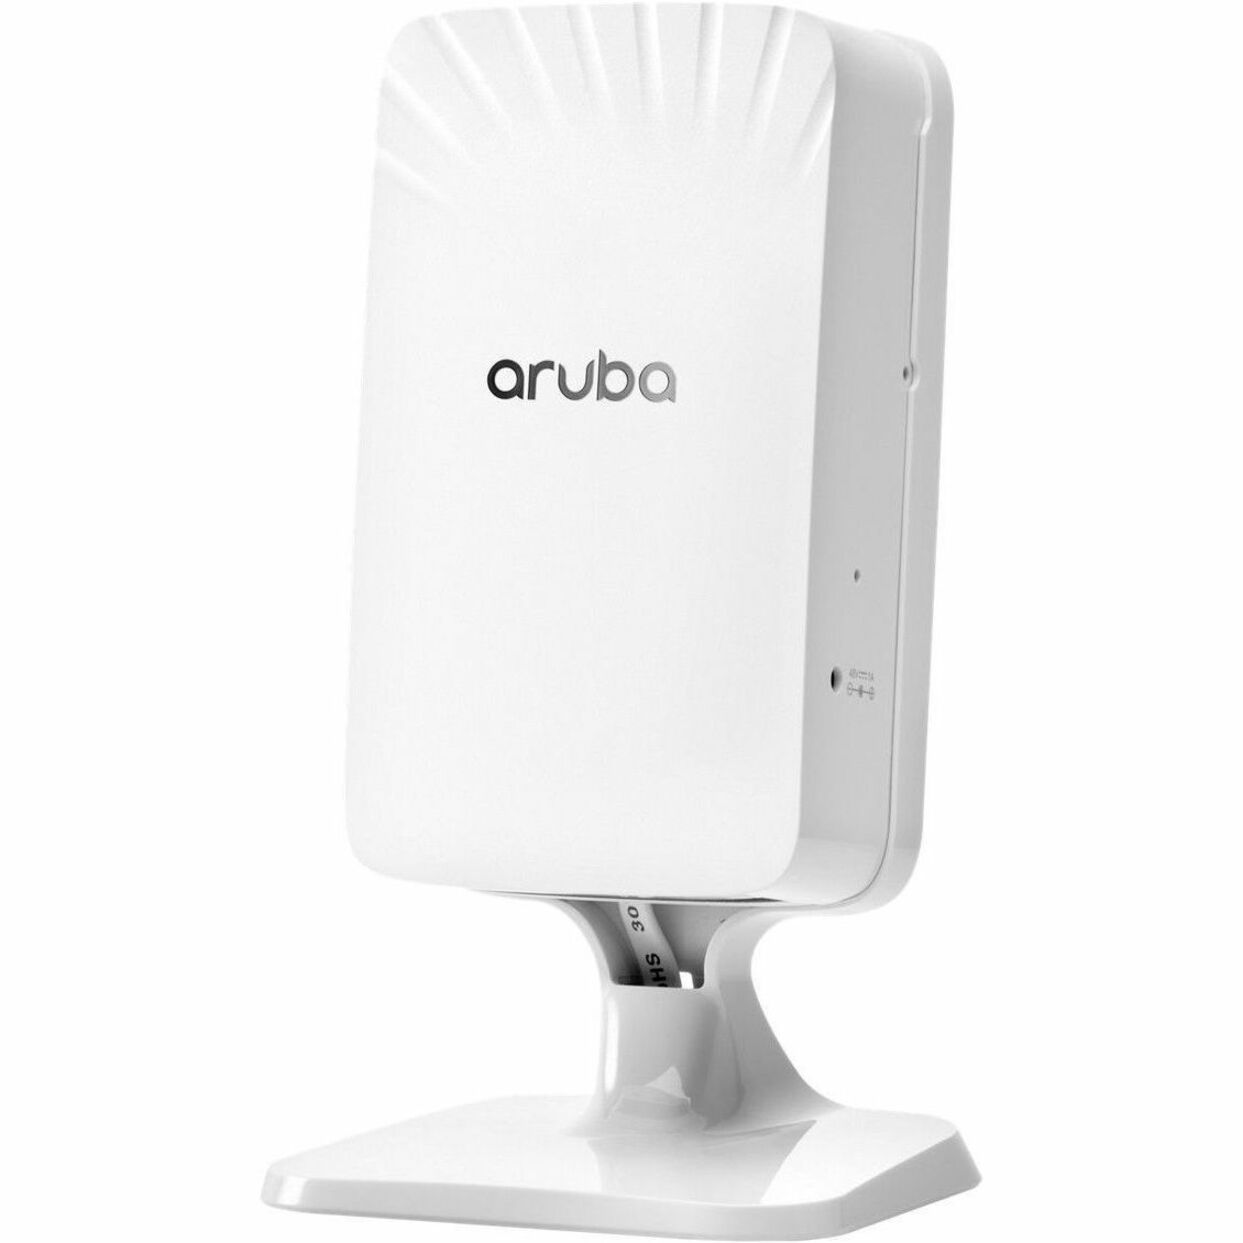 Aruba S0J41A Desk Mount for Wireless Access Point, Easy Desk Installation